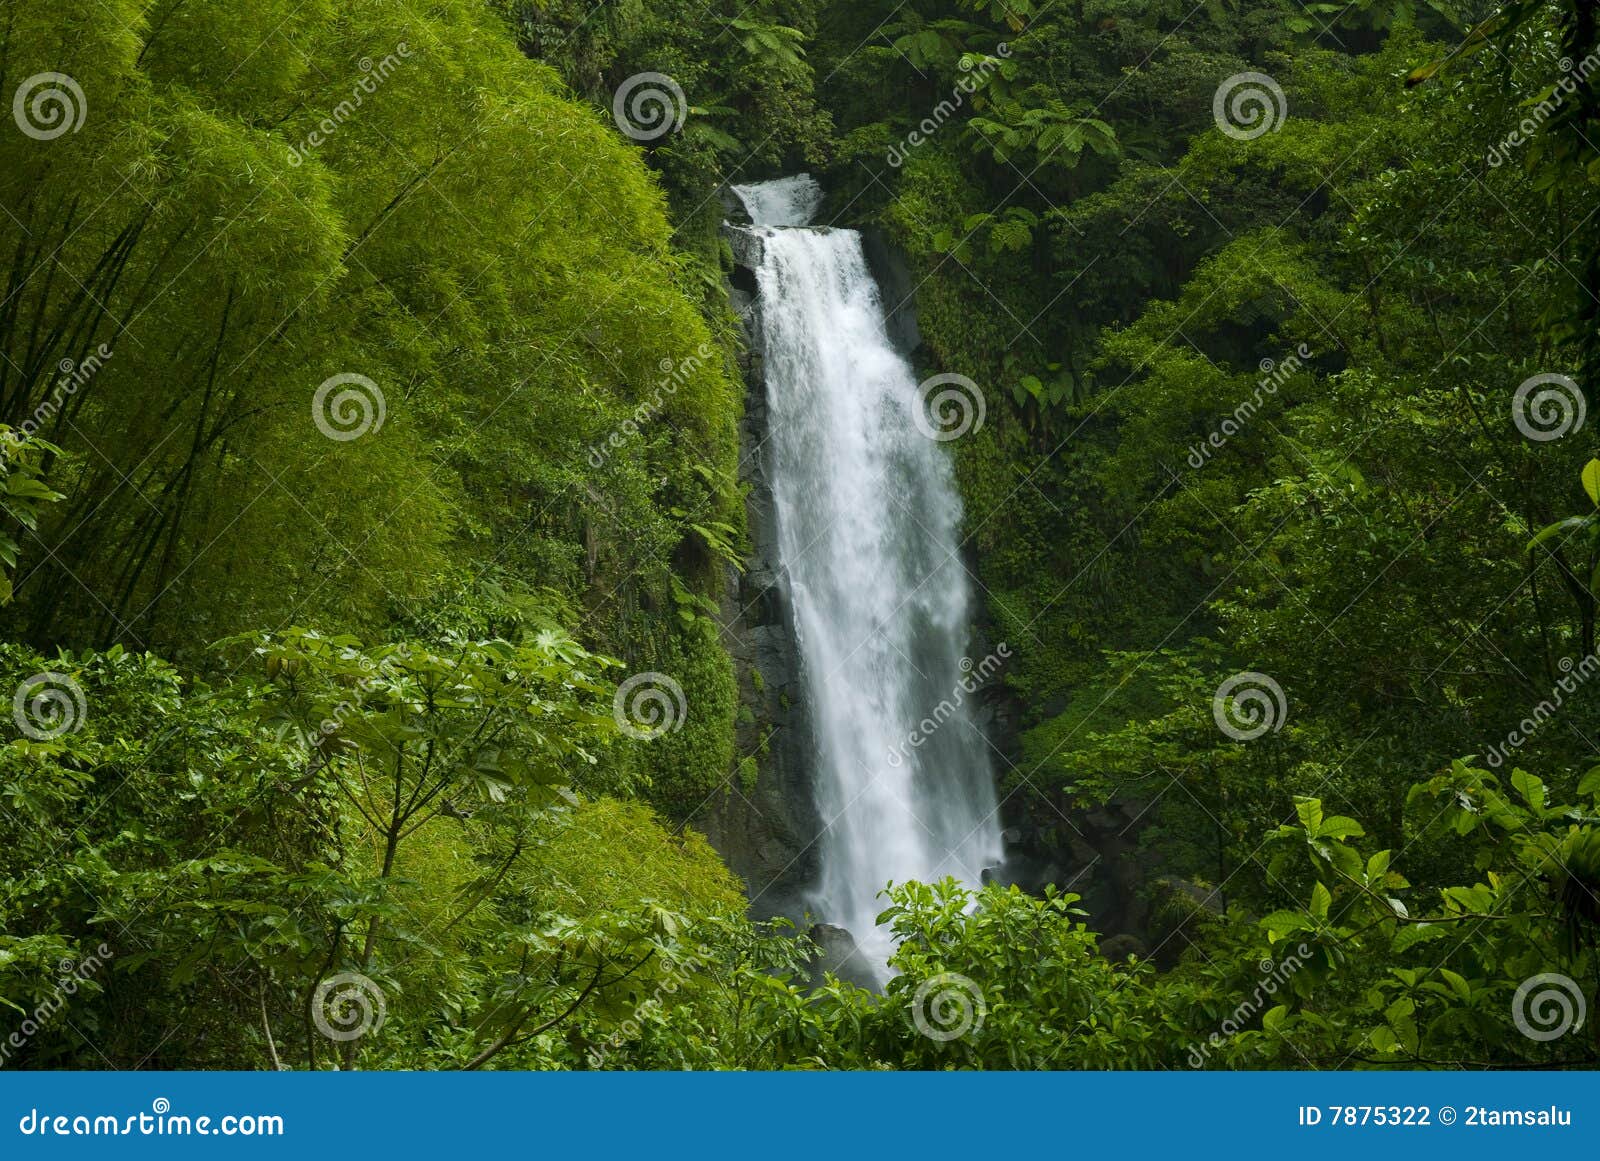 waterfall in rainforest jungle